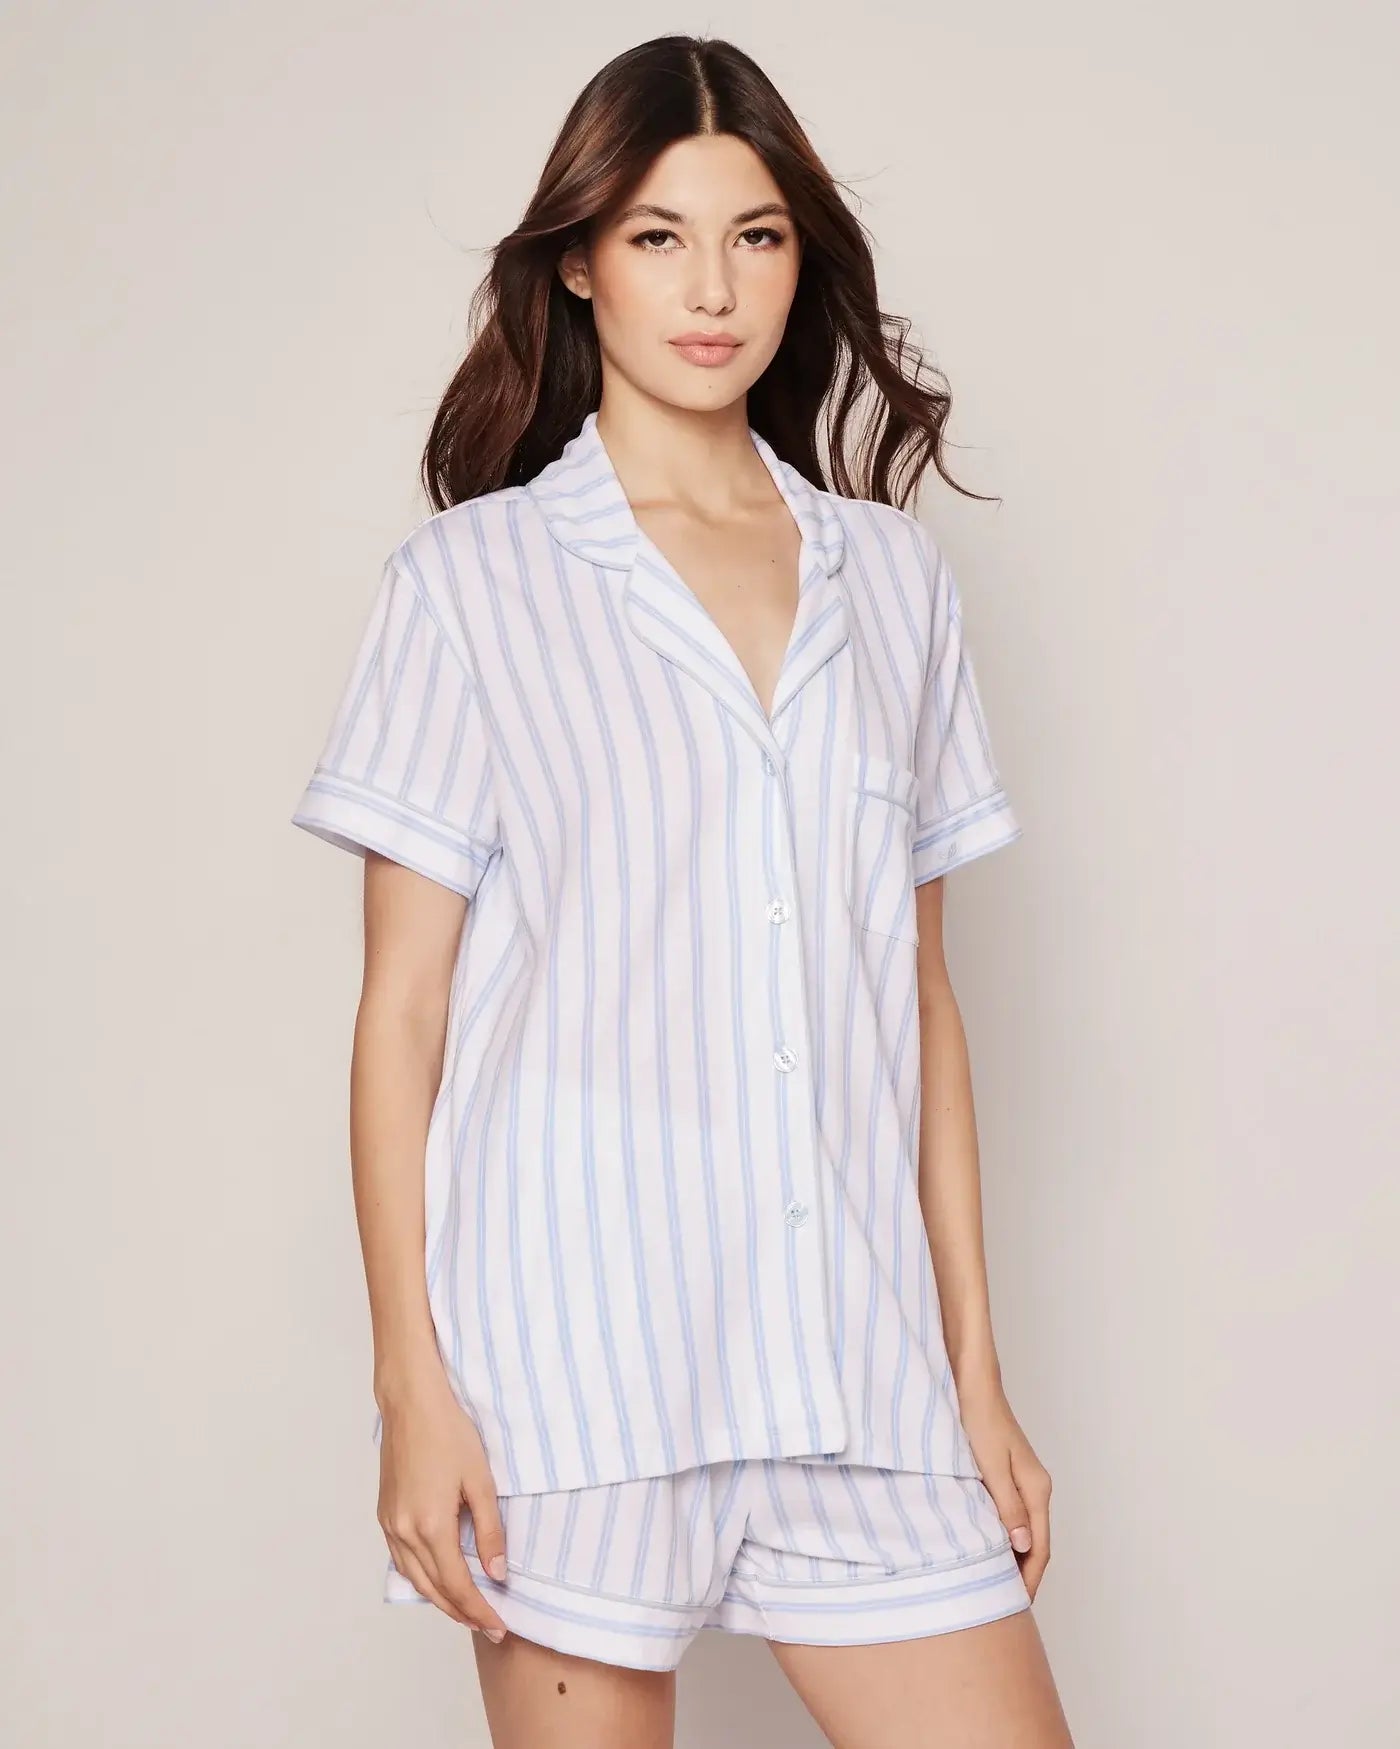 Pima Pajama Short Set in Periwinkle Stripe